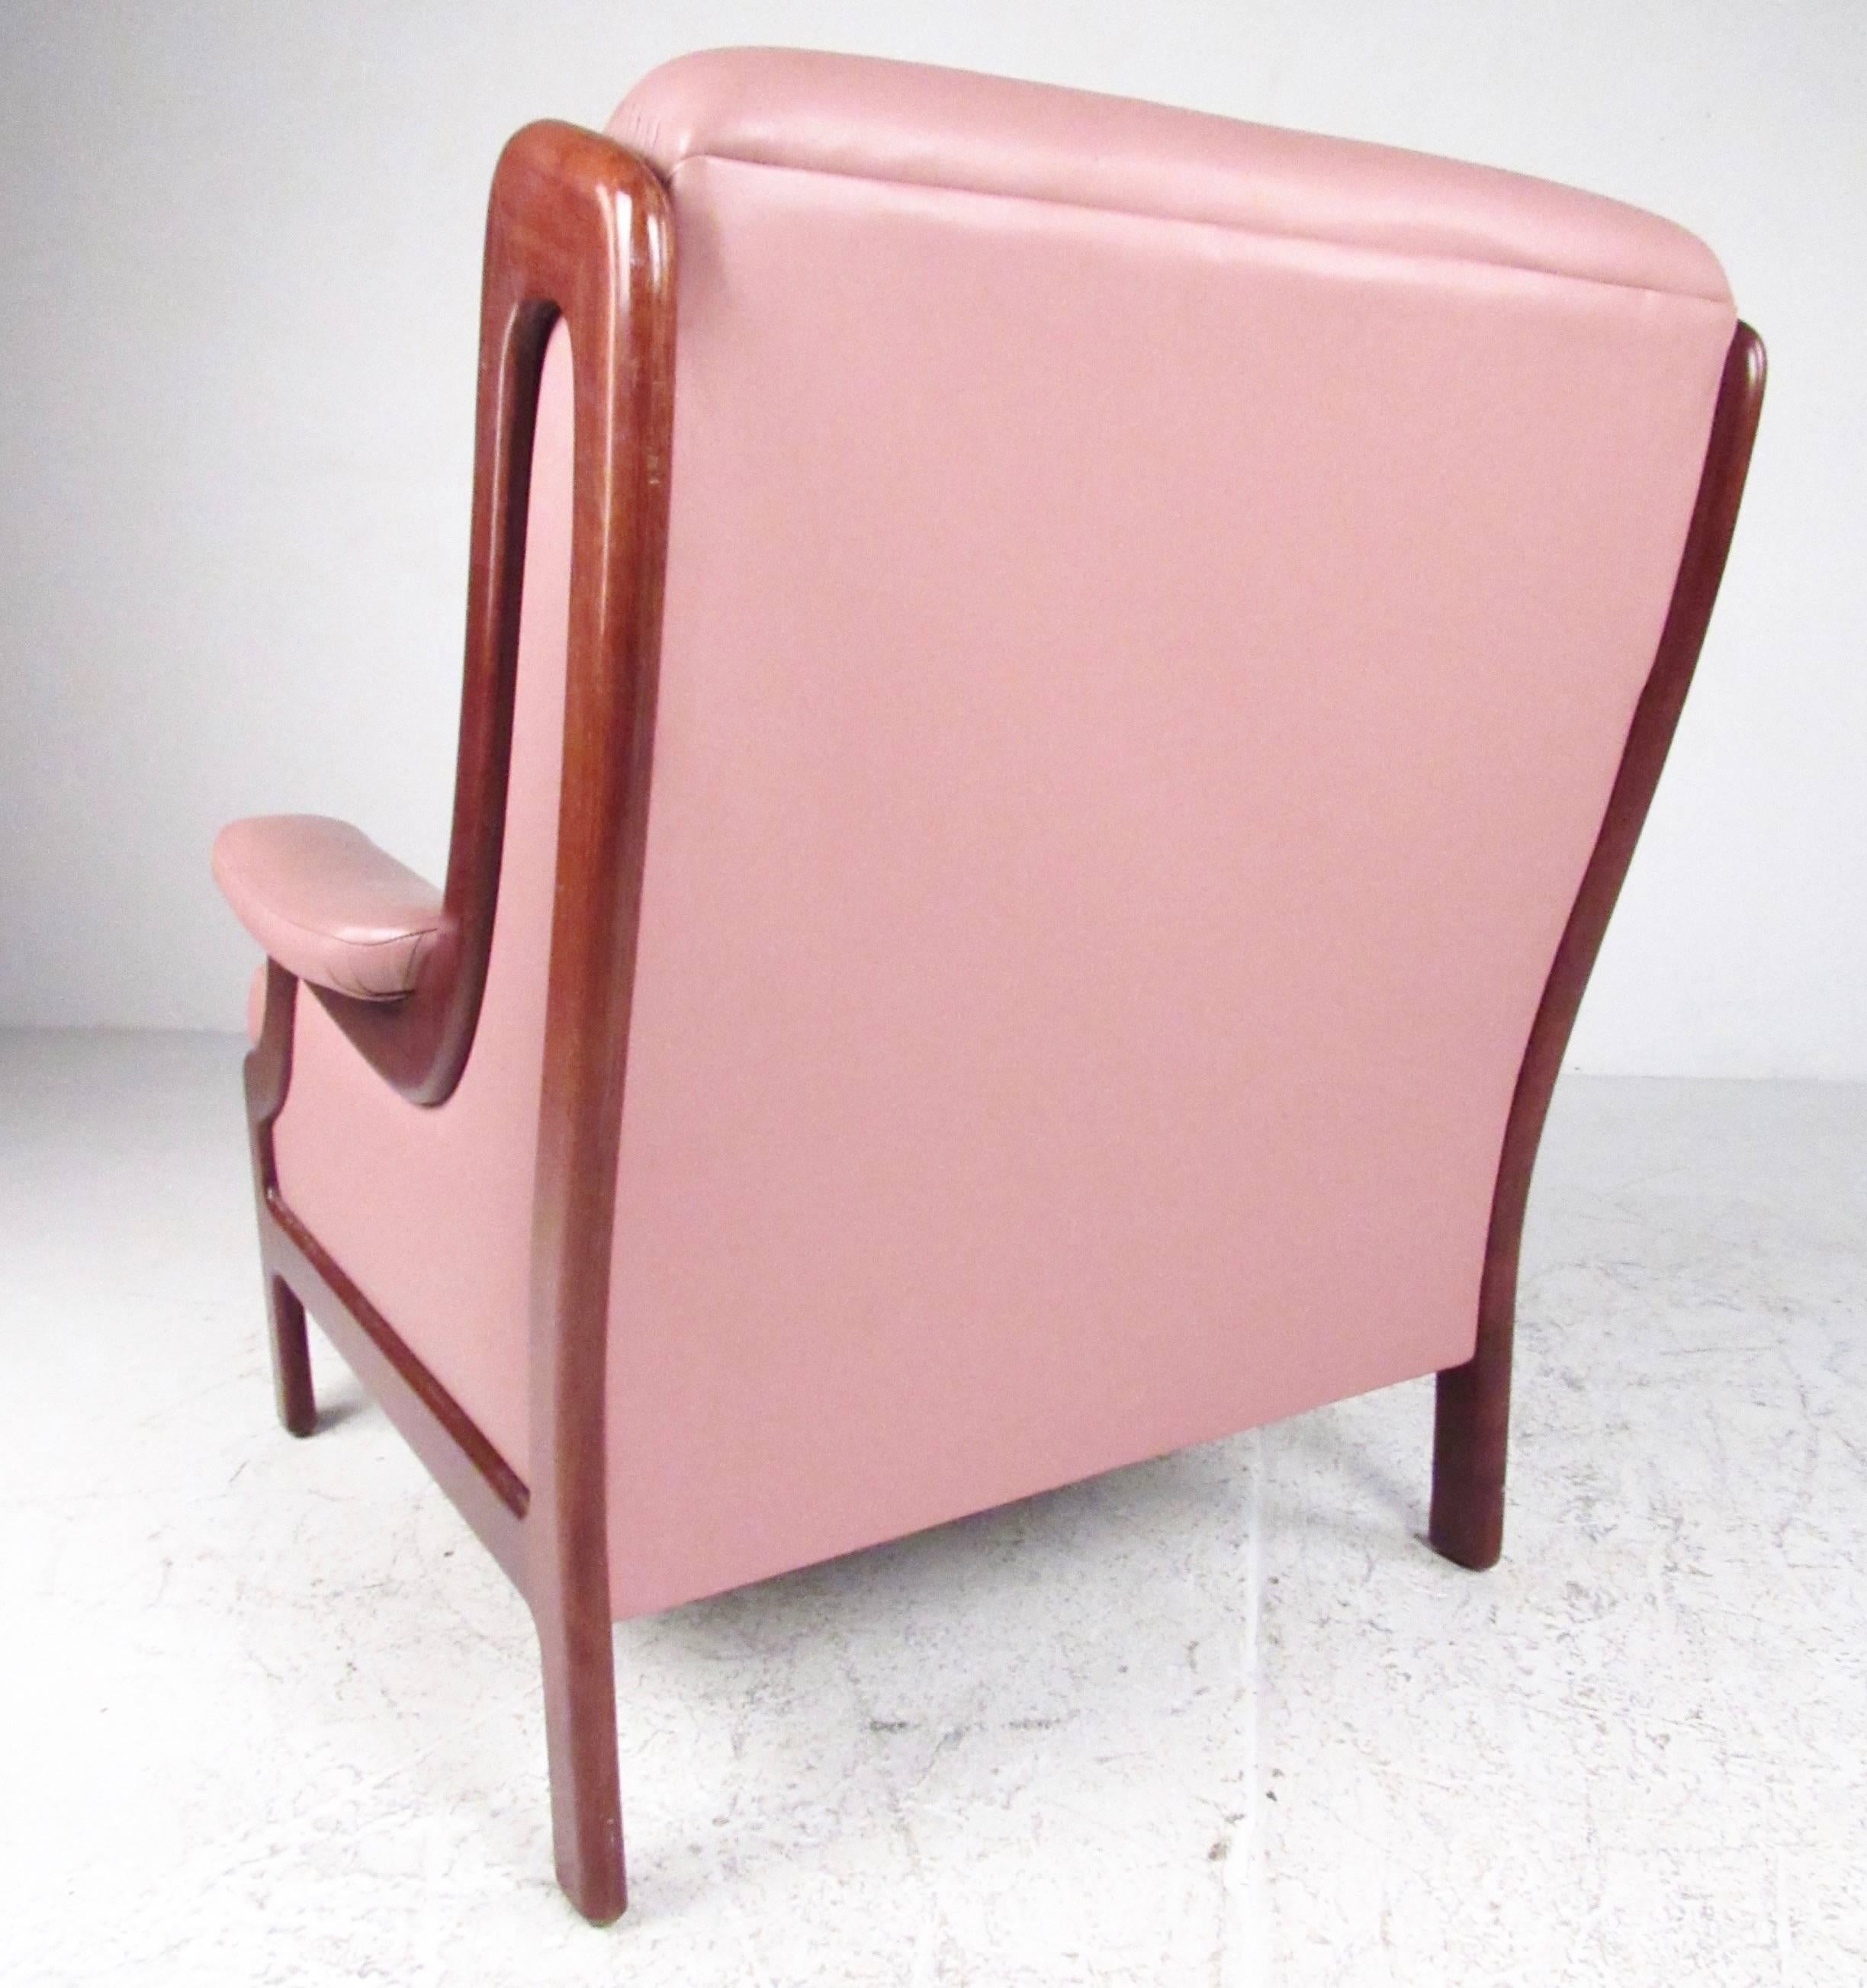 20th Century Scandinavian Modern Teak and Leather Lounge Chairs